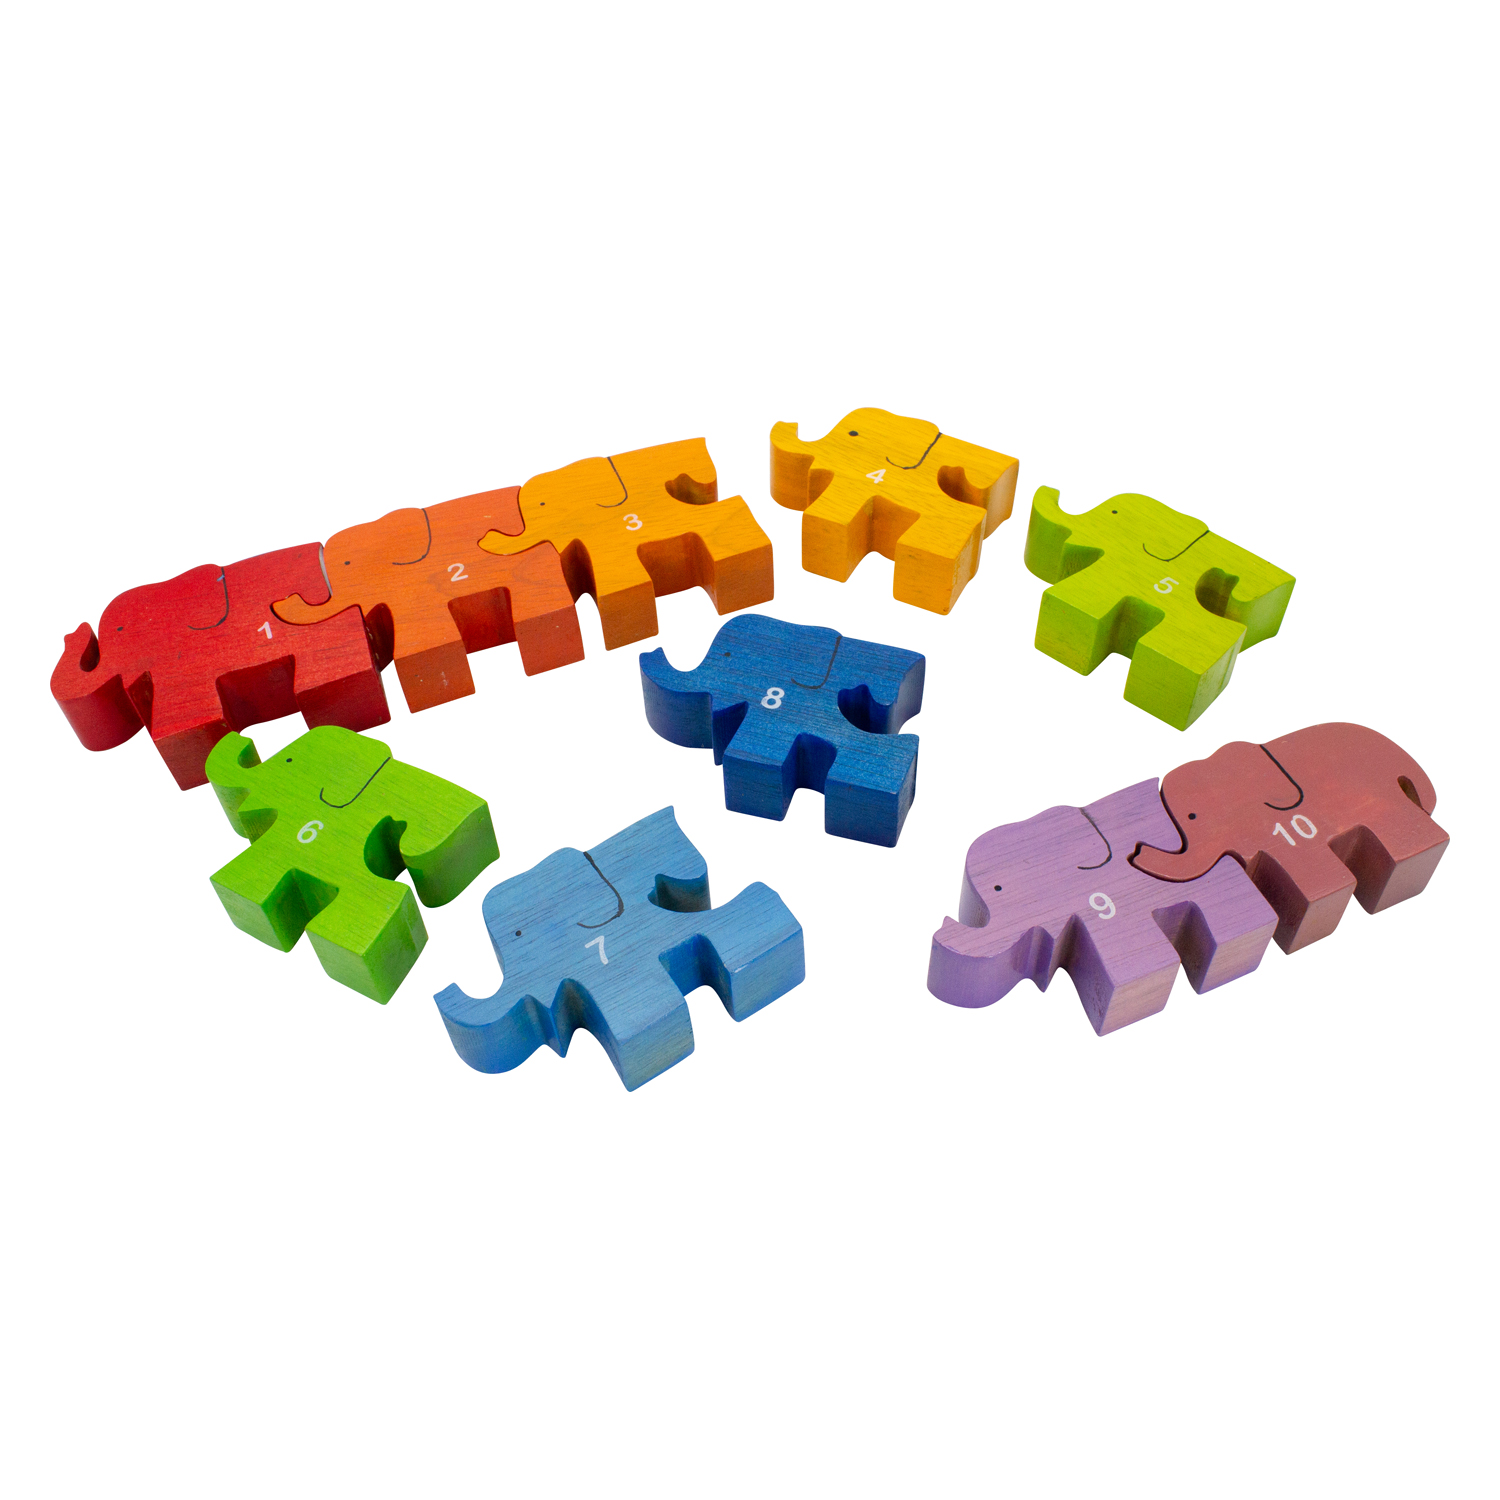 1-10 Elefanten Herde Puzzle Zahlenpuzzle für Kinder 10 -tlg Holz lasiert - 2907